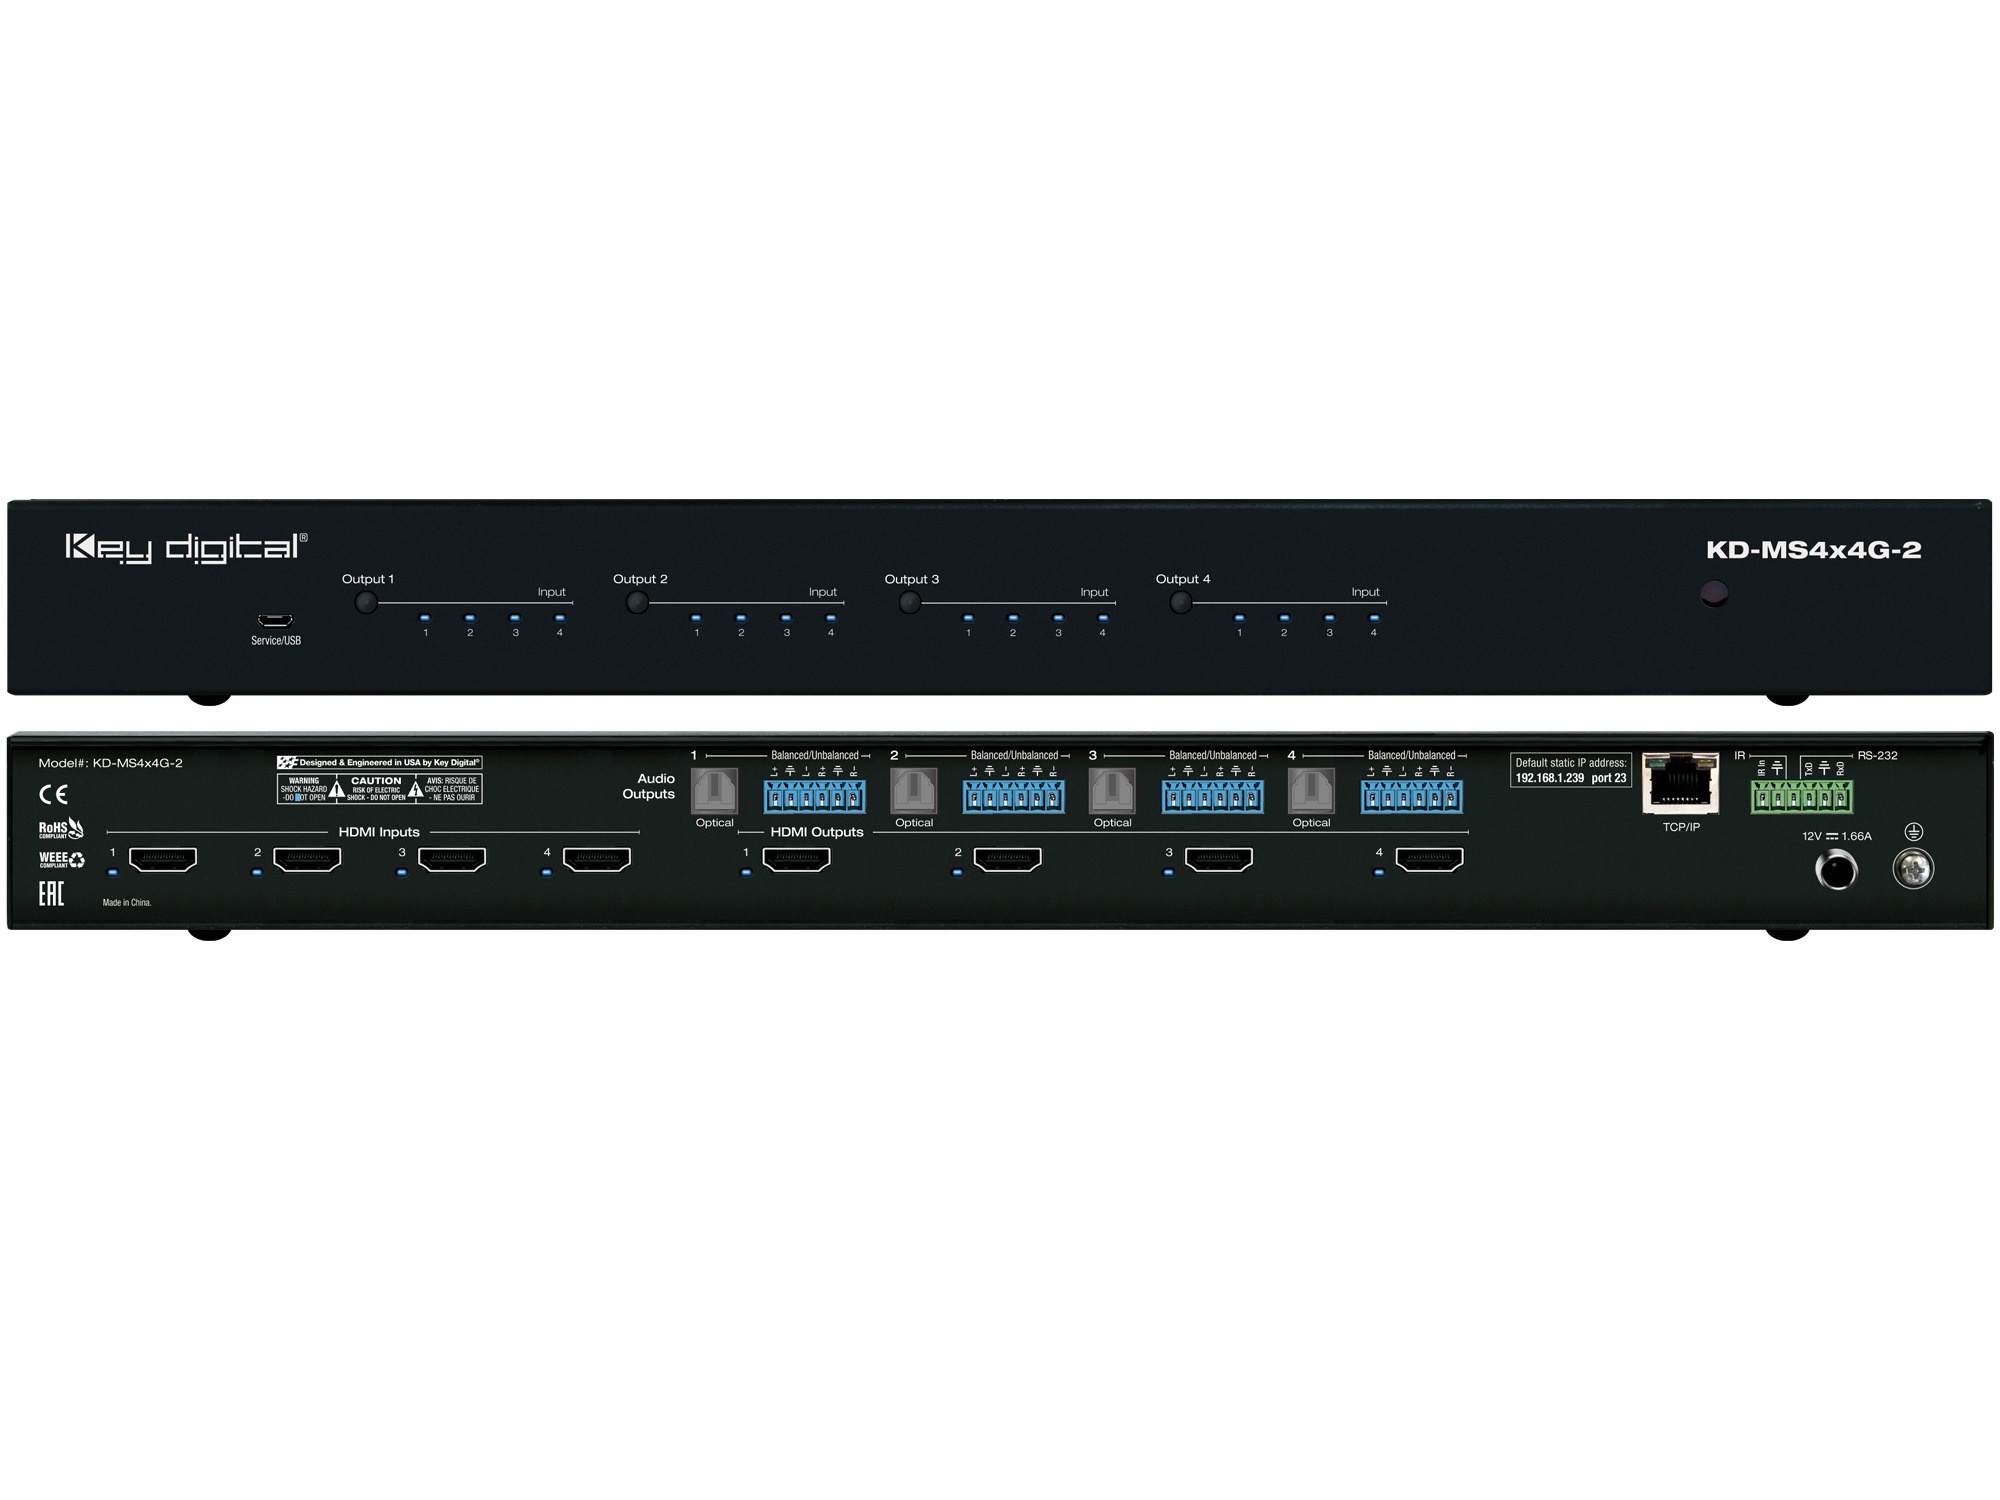 KD-MS4x4G-2 4x4 4K 18G HDMI Matrix Switch with Independent Audio Routing/Digital Optical and Analog Balanced/Un-balanced Audio De-Embedding/Web Control UI by Key Digital